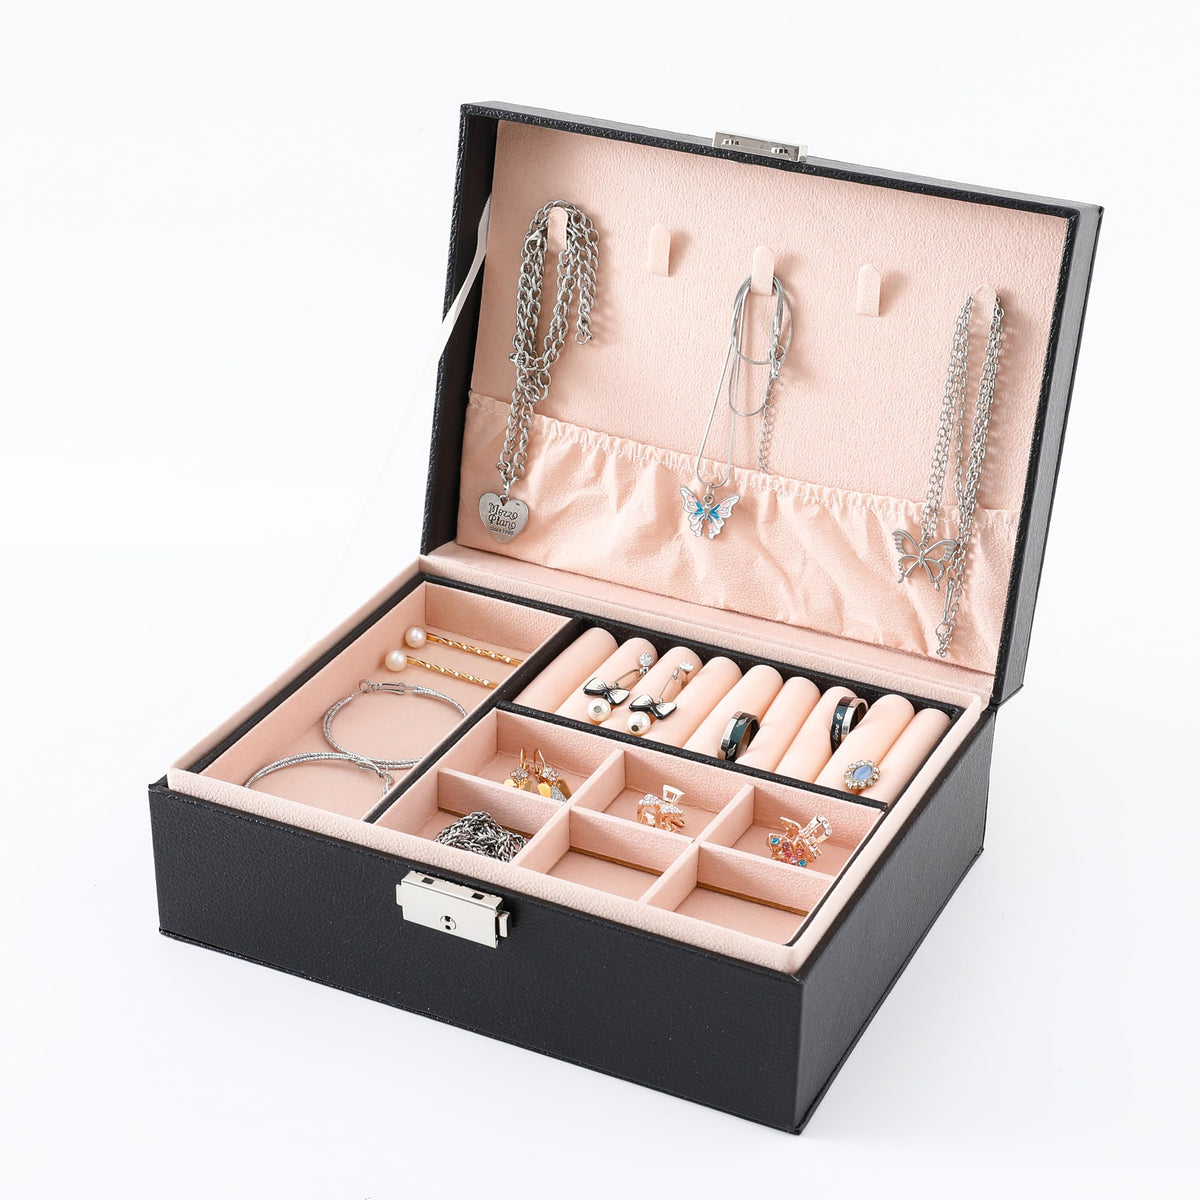 Kuber Industries Pack of 2 Mini Jewelry Box | Travel Jewellery Organizer Storage Box | Portable Case for Rings Earrings | Portable Jewelry Organizer | Proposal Gifts for Women Girl |YXX-025 | Black